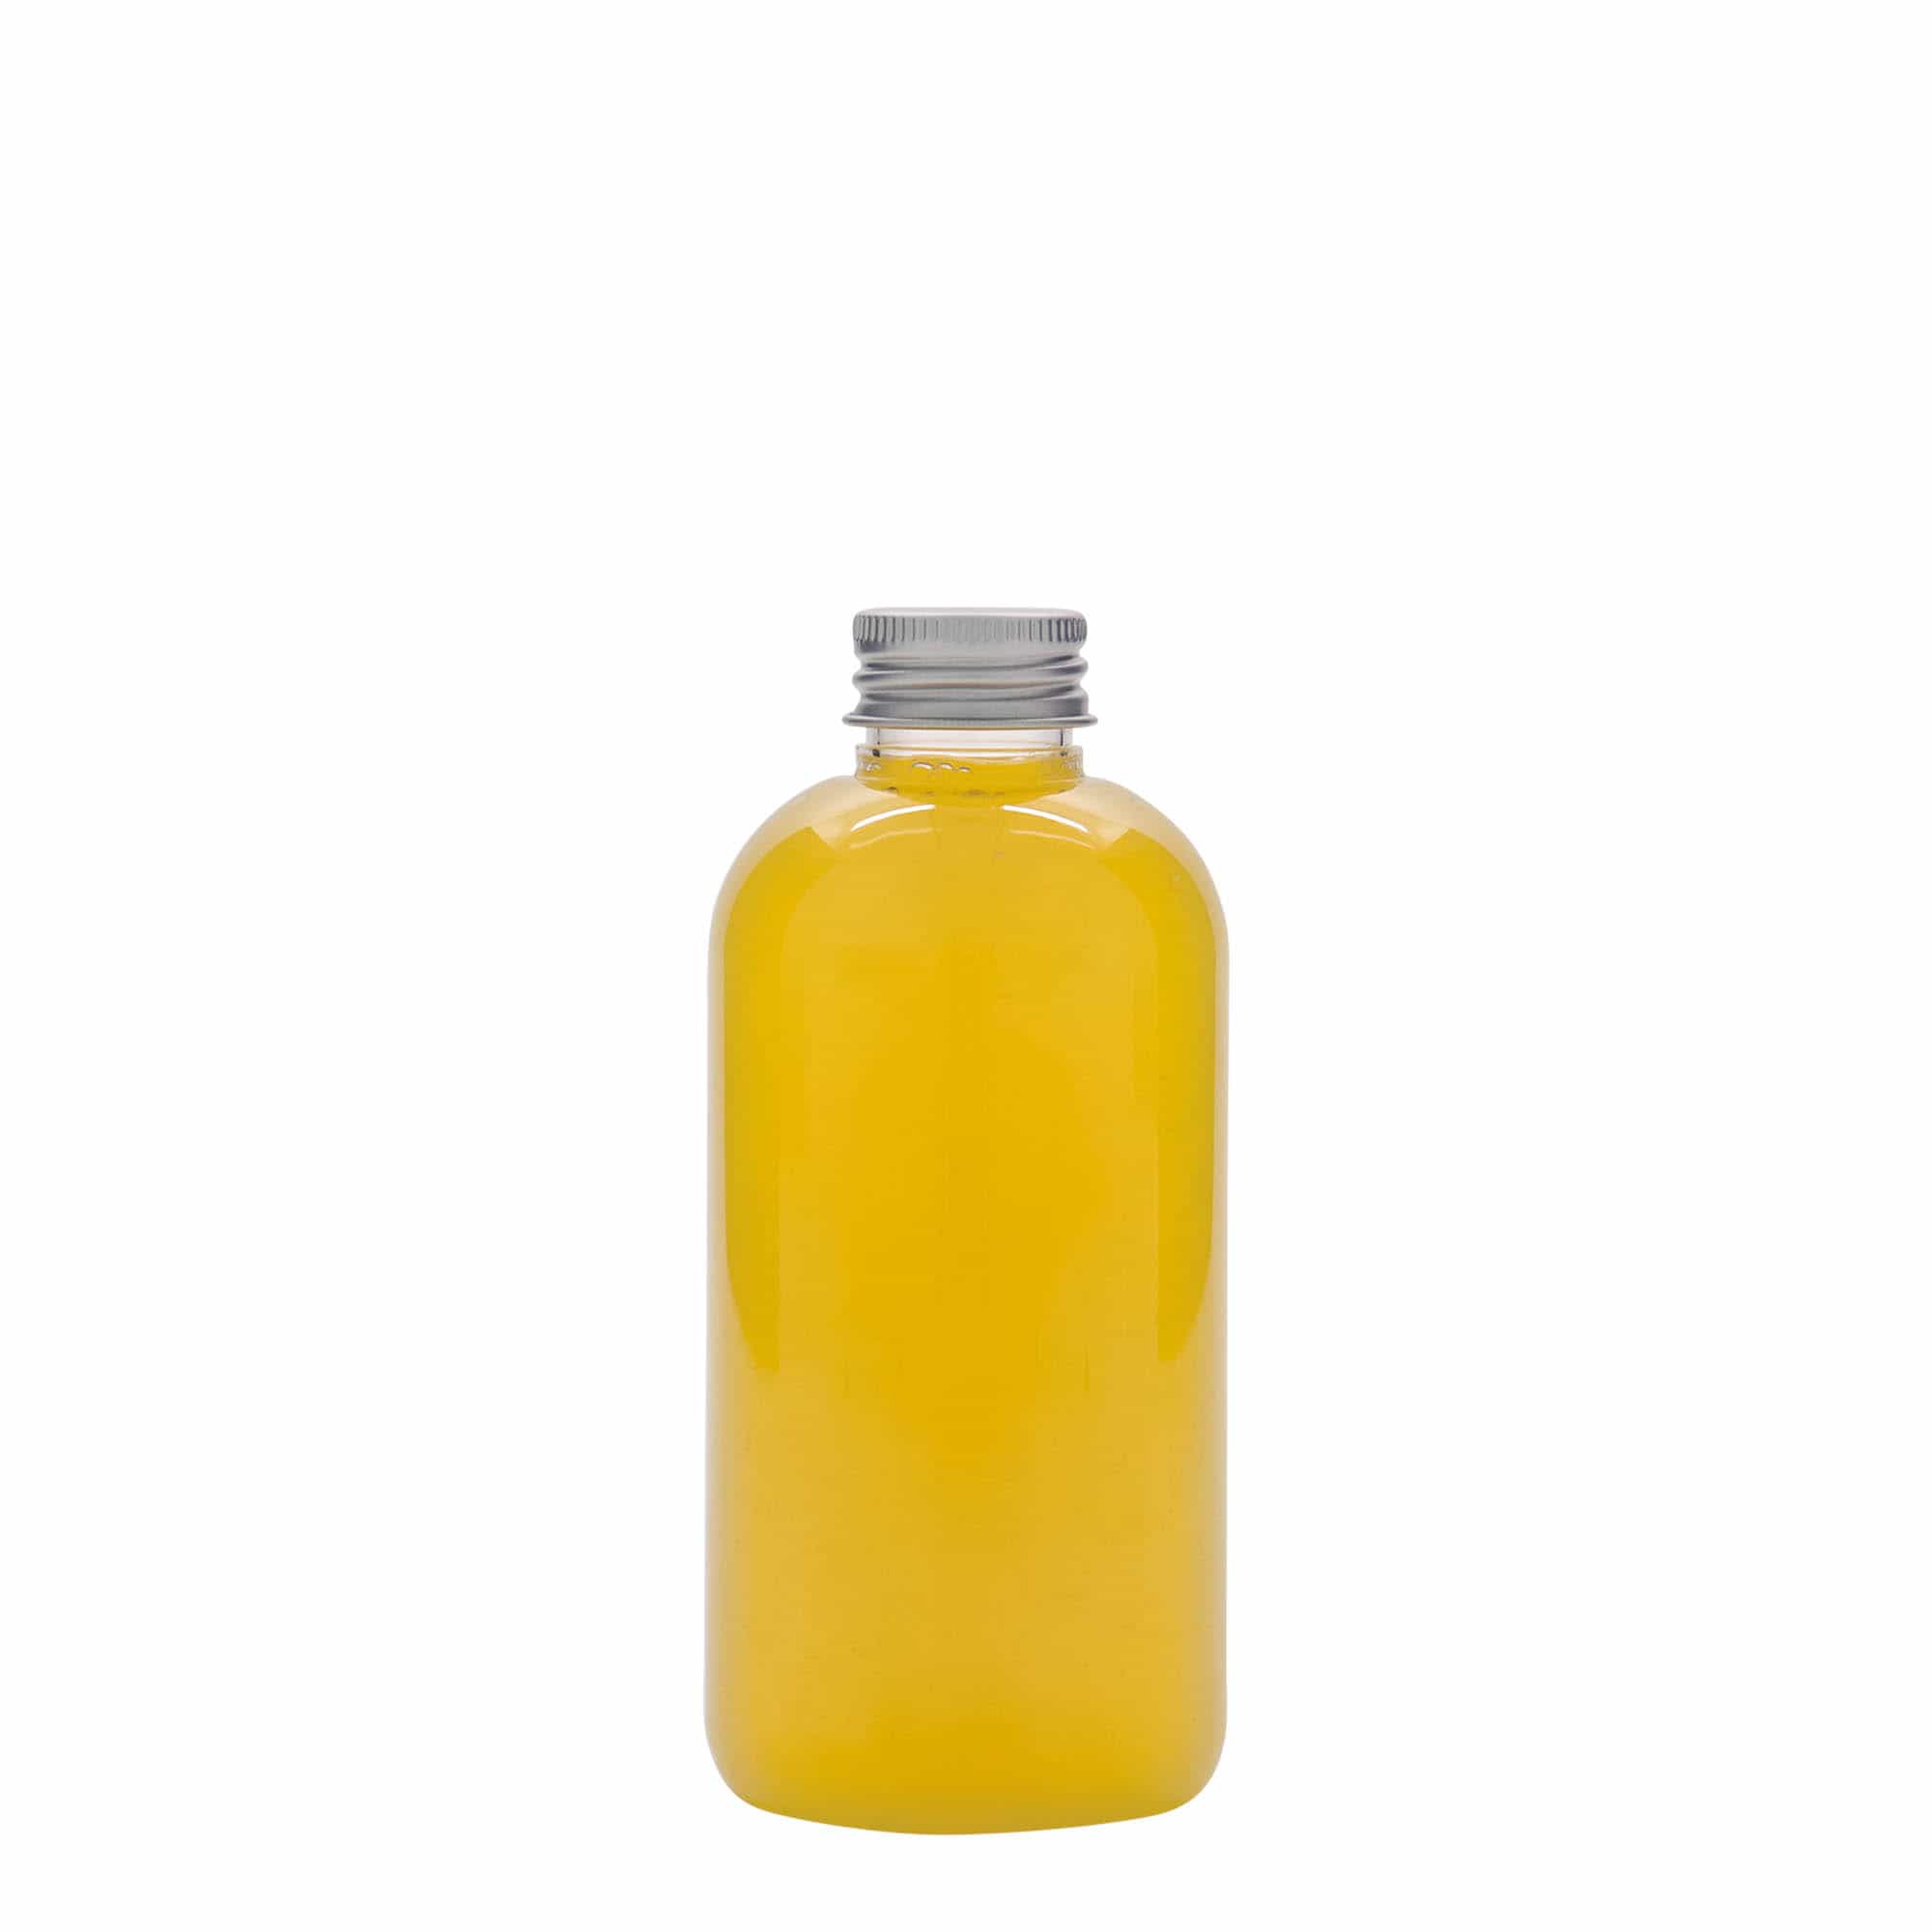 200 ml PET bottle 'Boston', plastic, closure: GPI 24/410